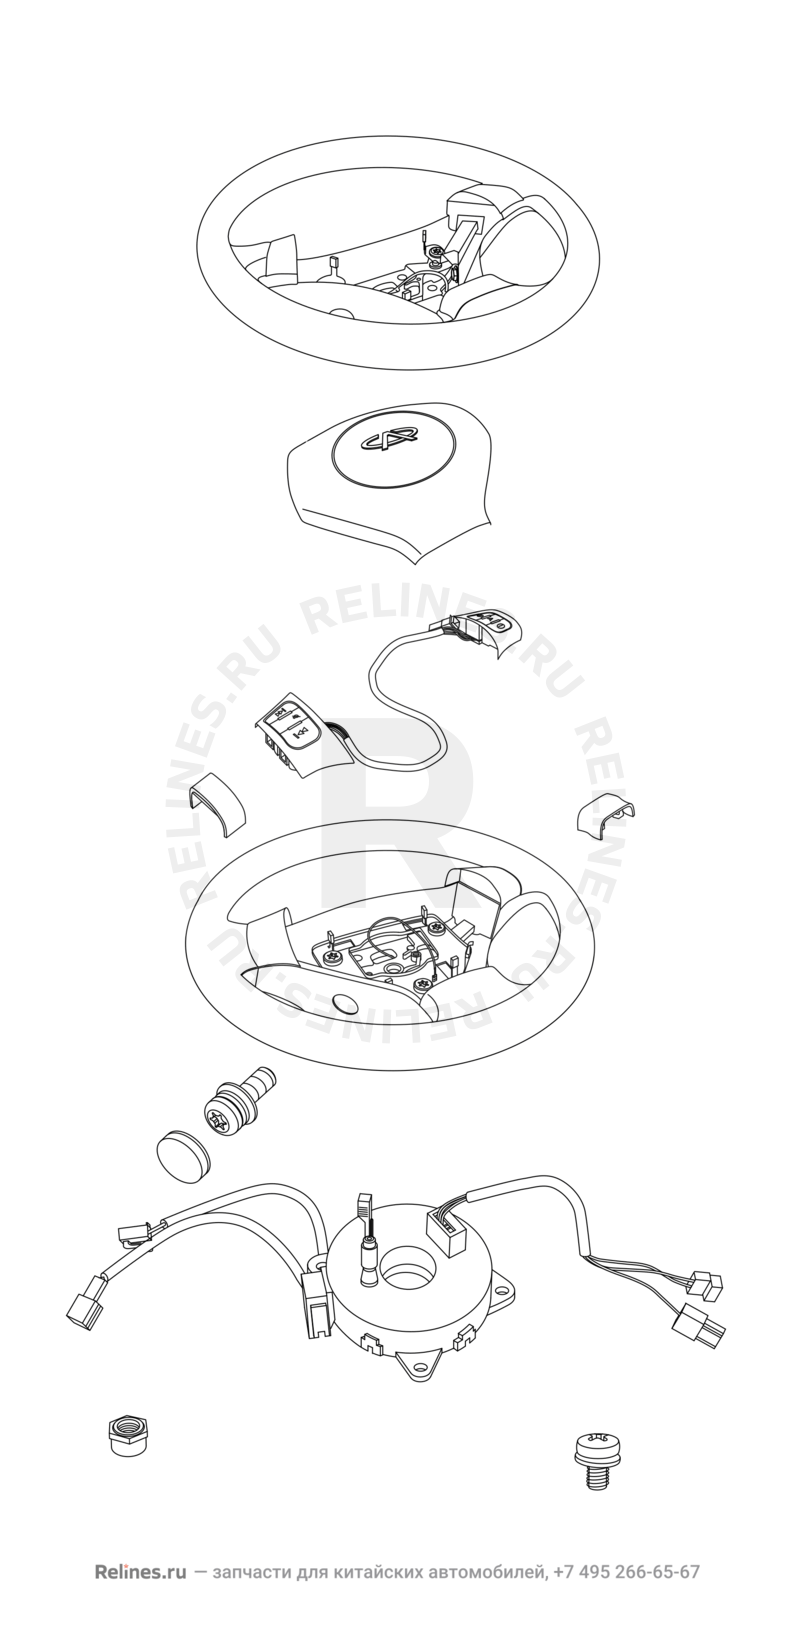 Запчасти Chery Tiggo Поколение I (2005)  — Рулевое колесо (руль), рулевое управление и подушки безопасности — схема